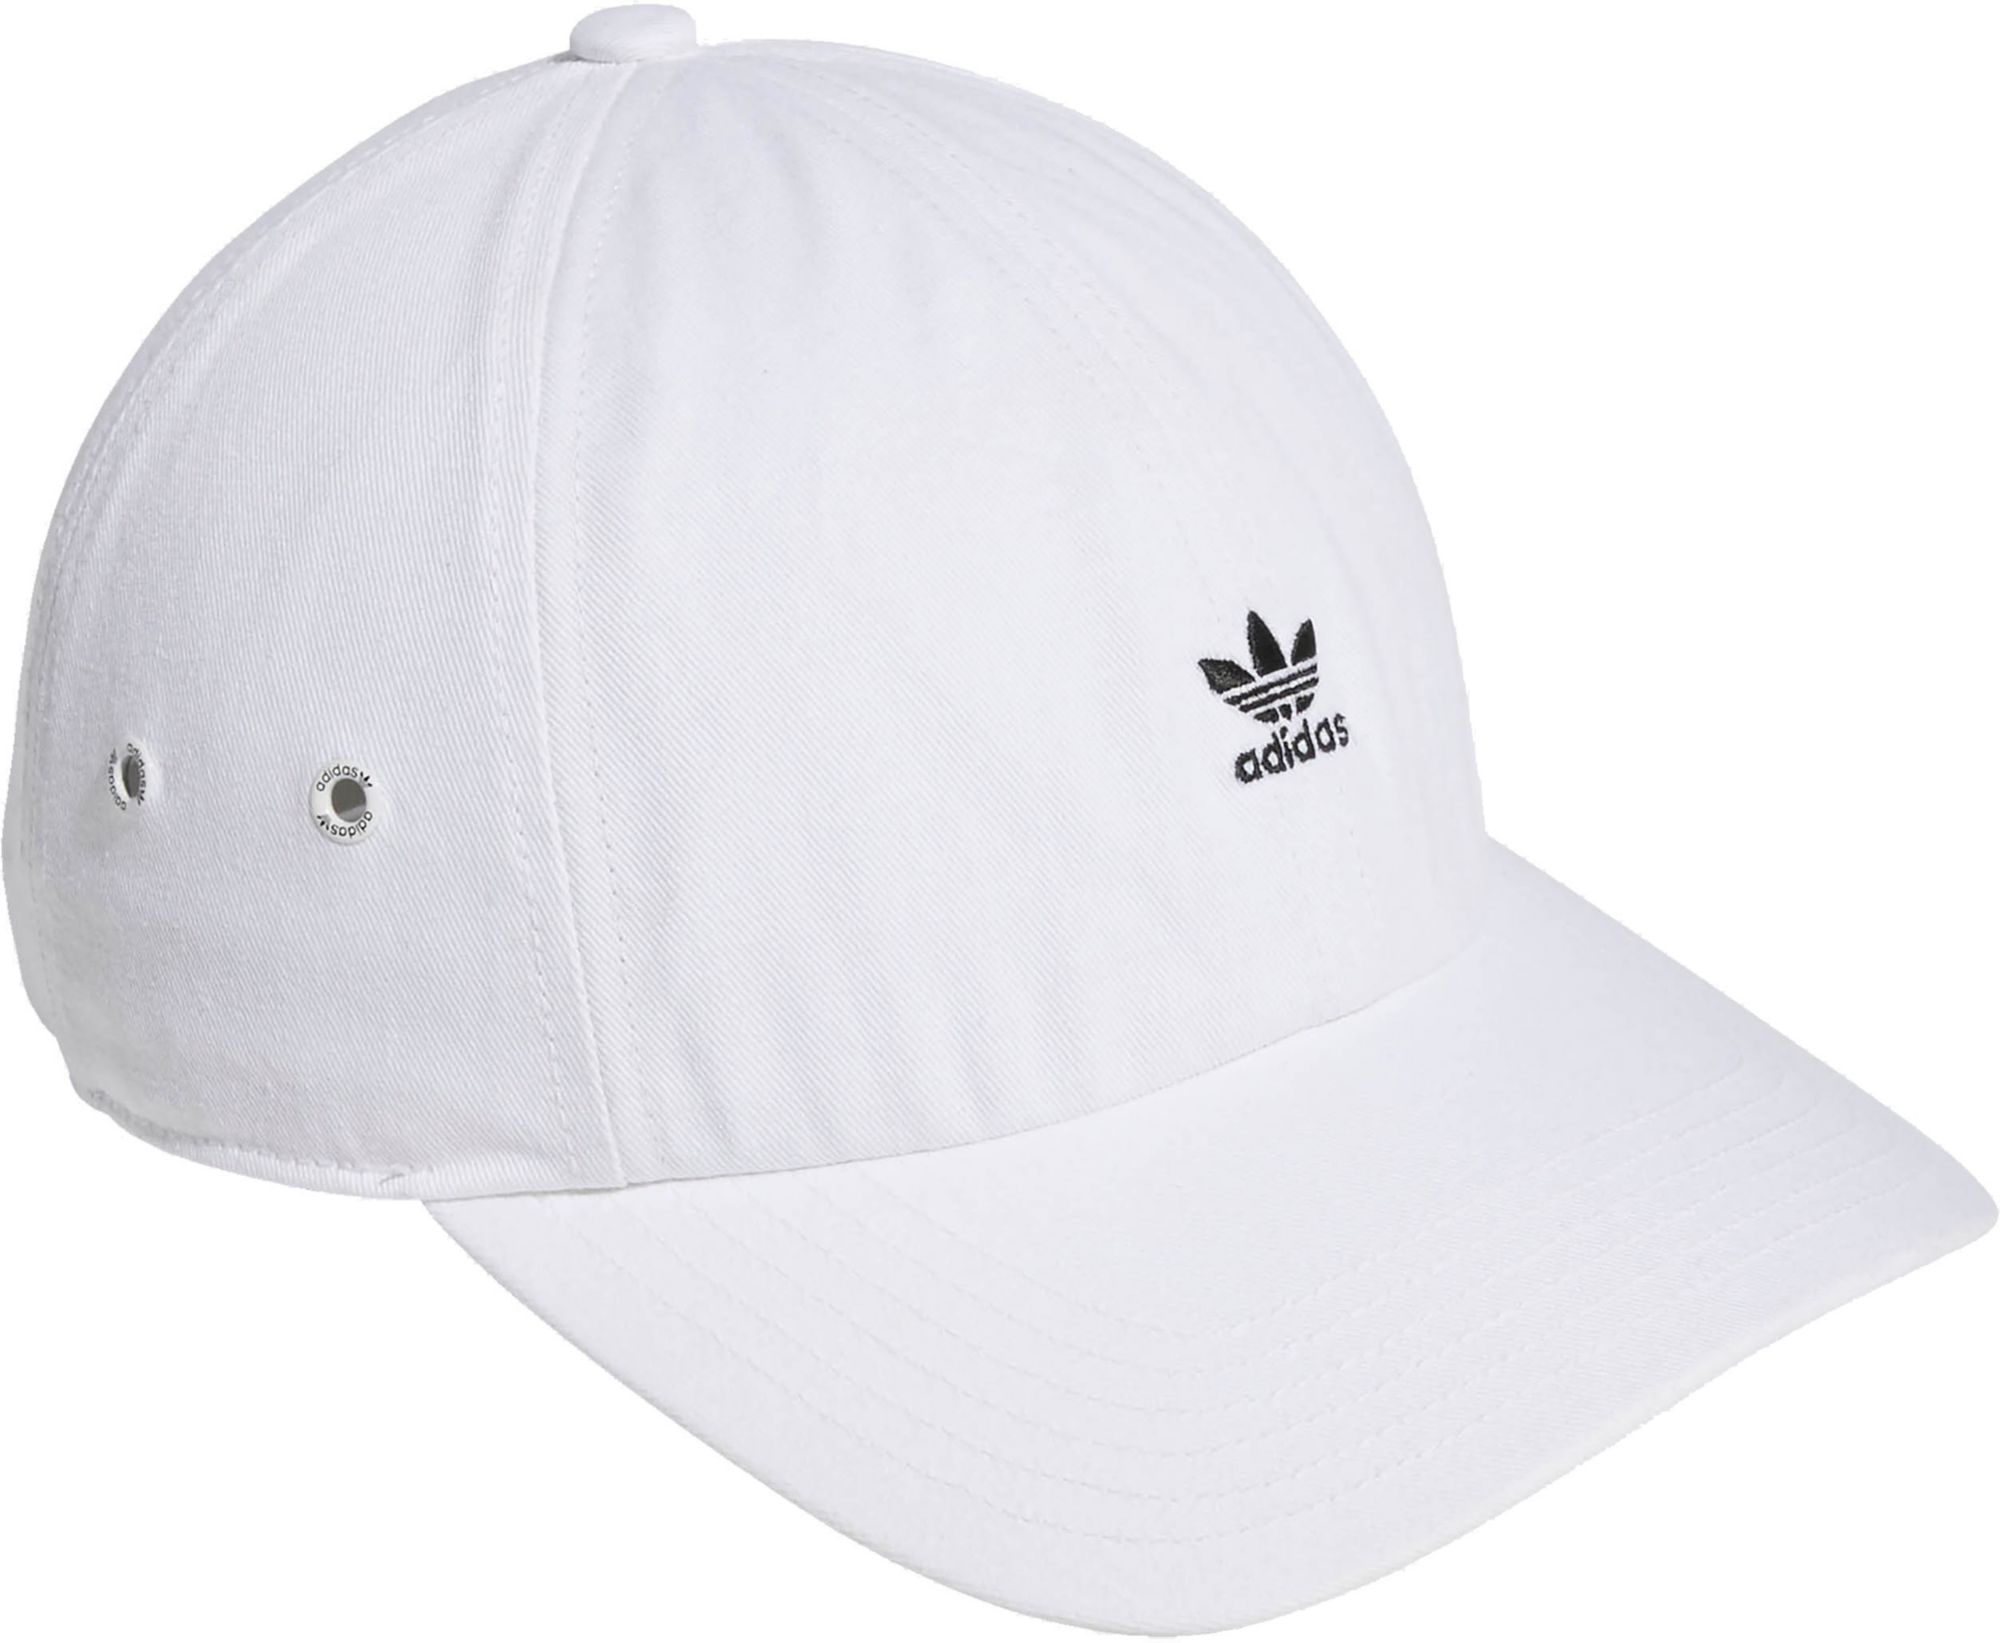 adidas mini logo hat